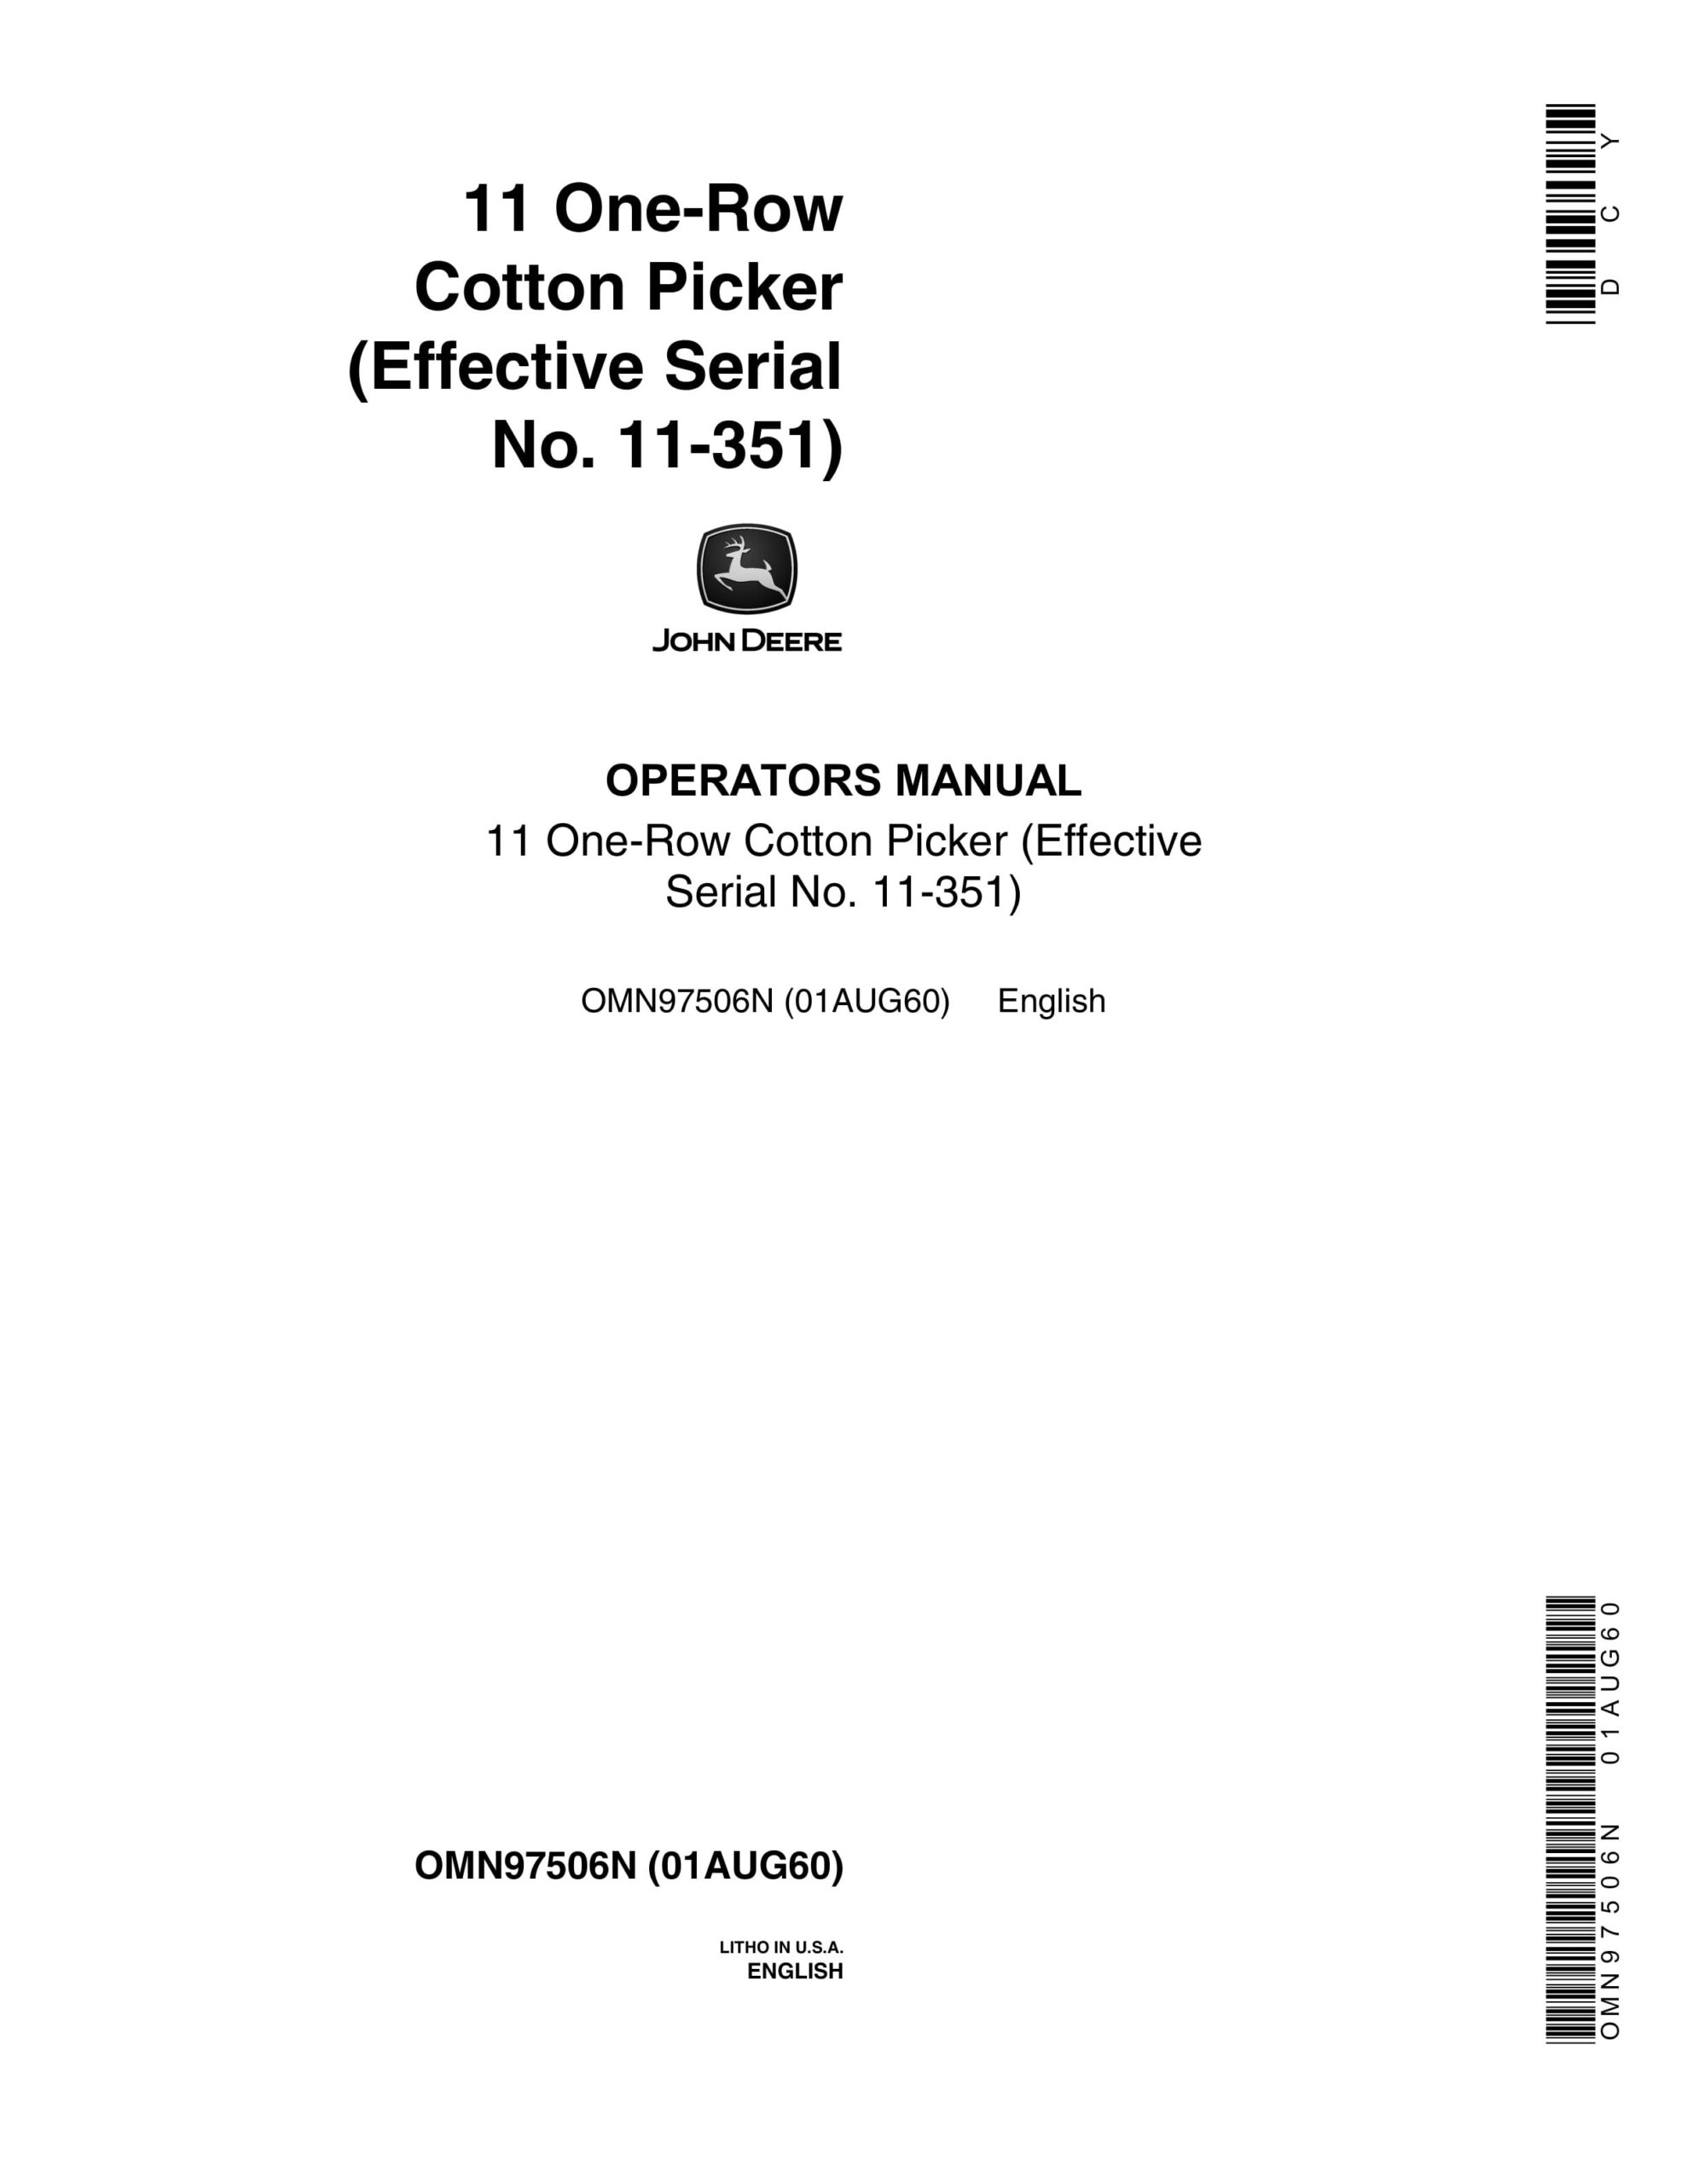 John Deere 11 One-Row Cotton Picker Operator Manual OMN97506N-1